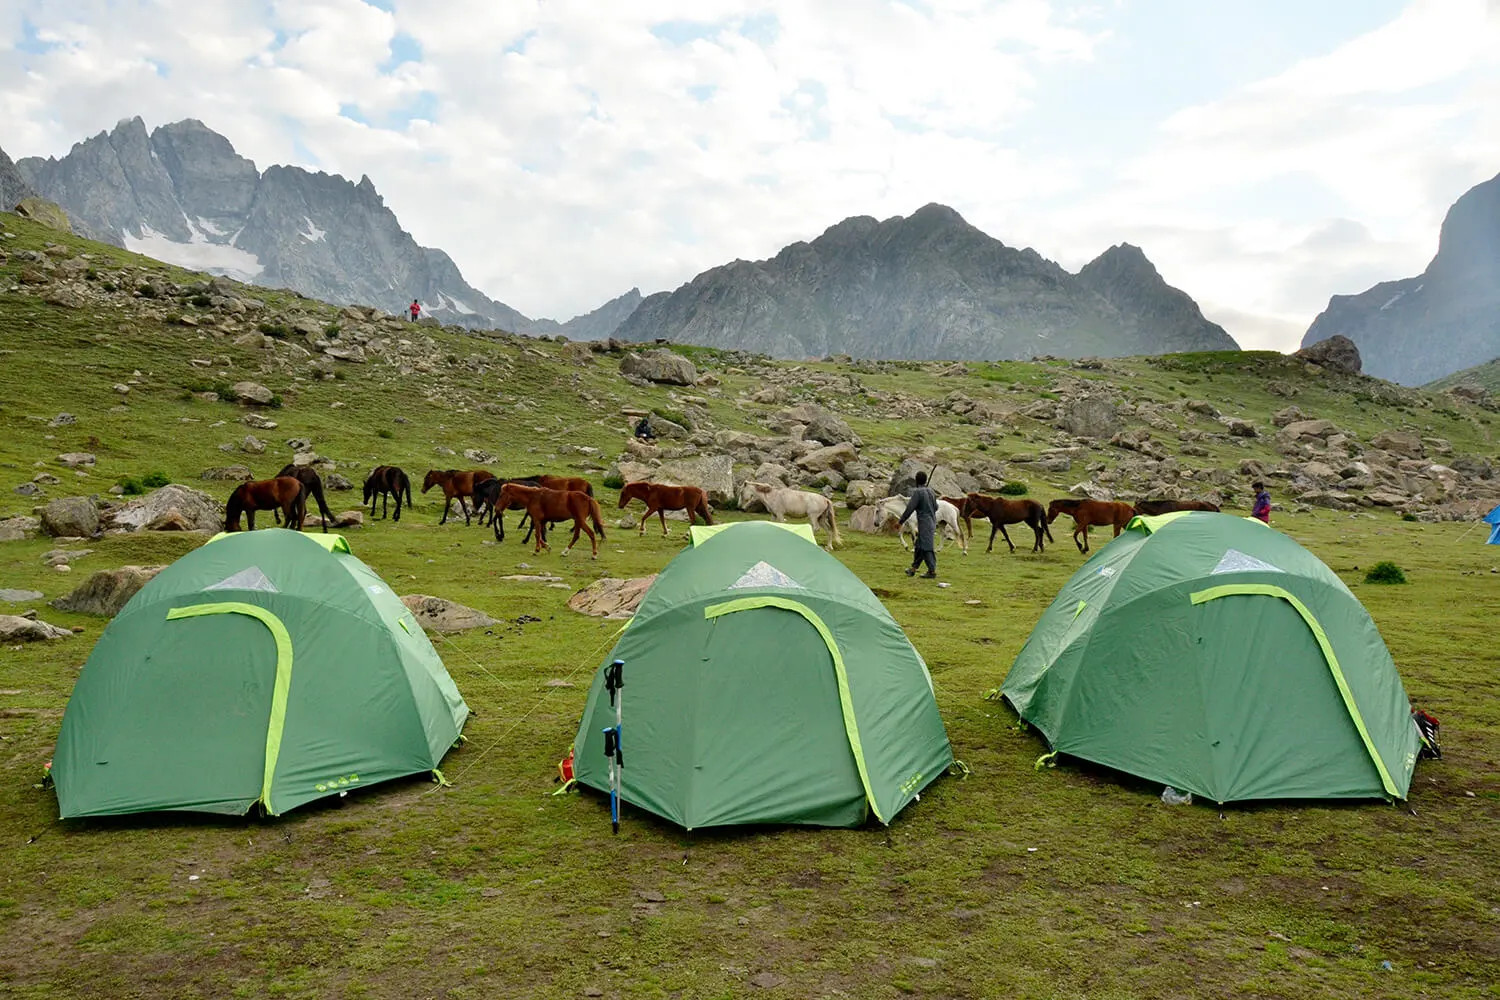 A campsite nestled beneath the majestic gaze of the Himalayas.